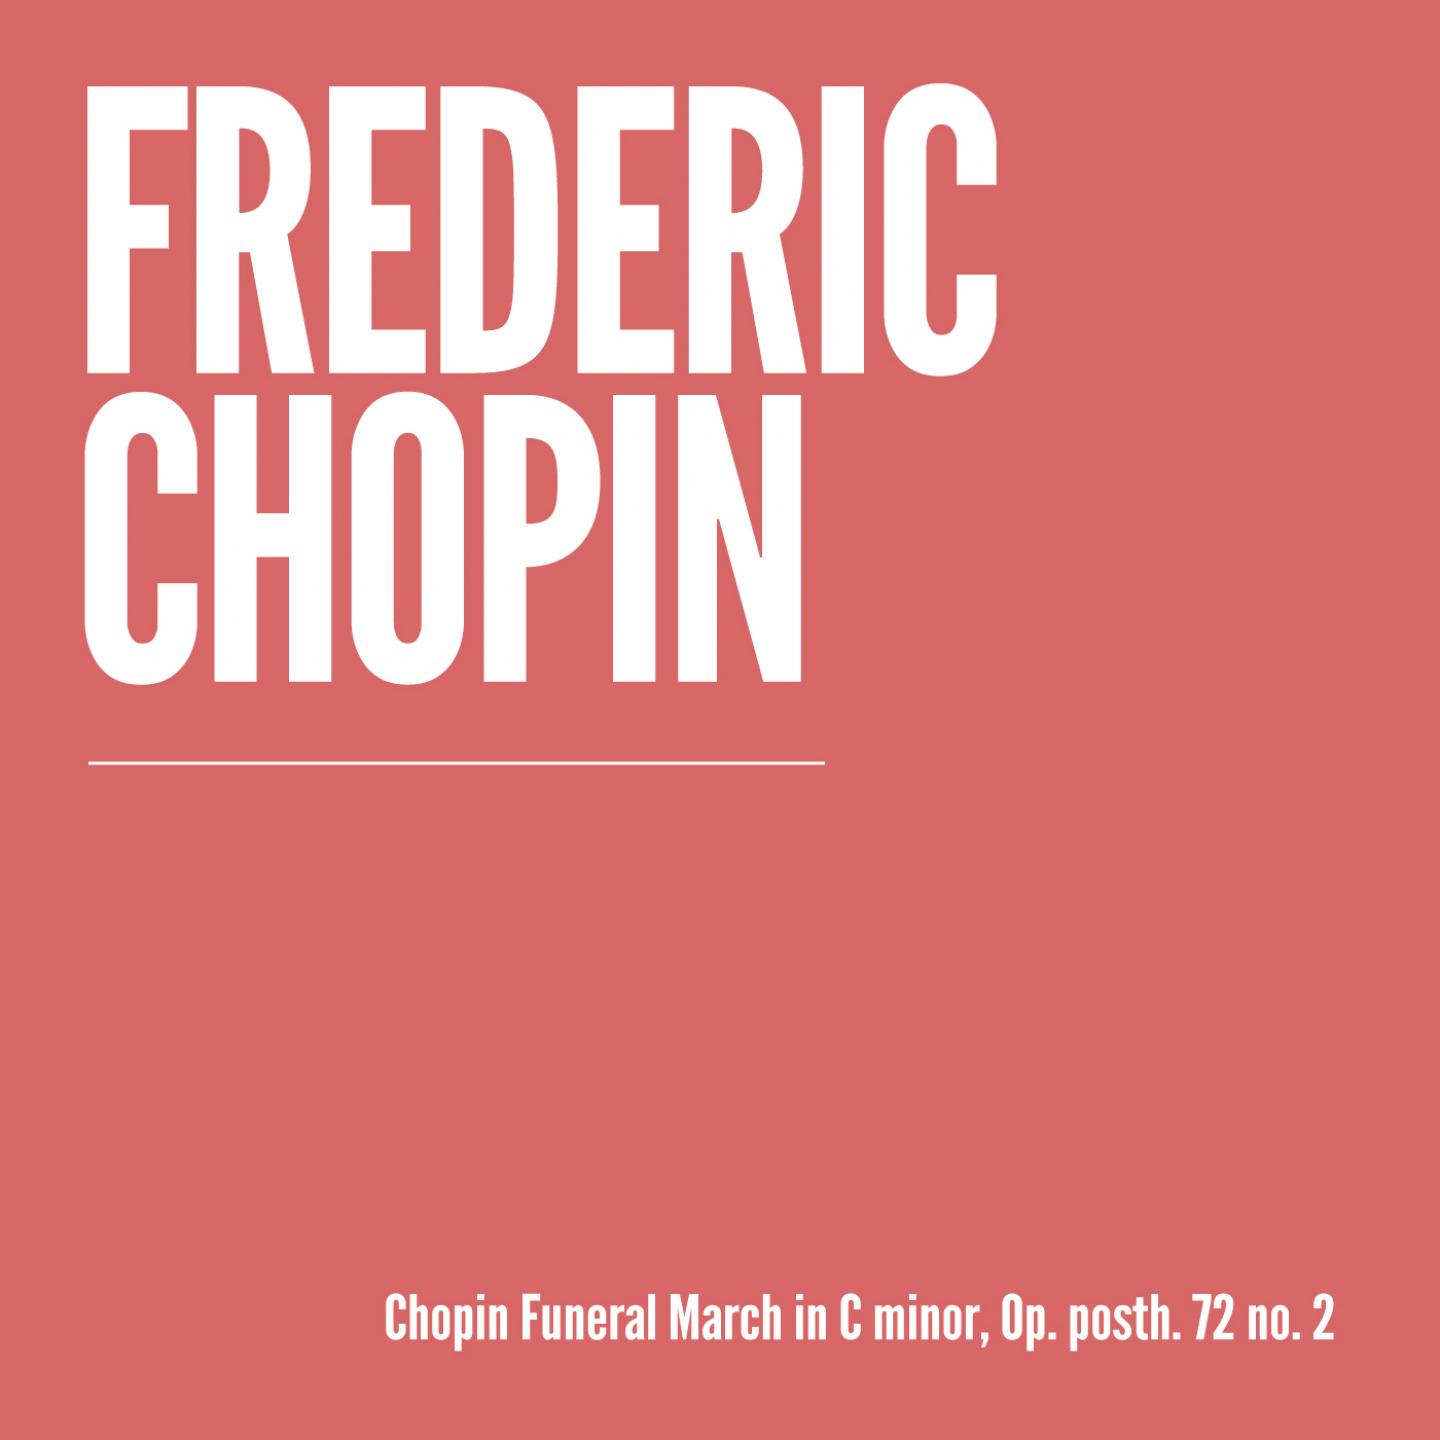 Chopin Funeral March, Op. posth. 72 no. 2 in C Minor